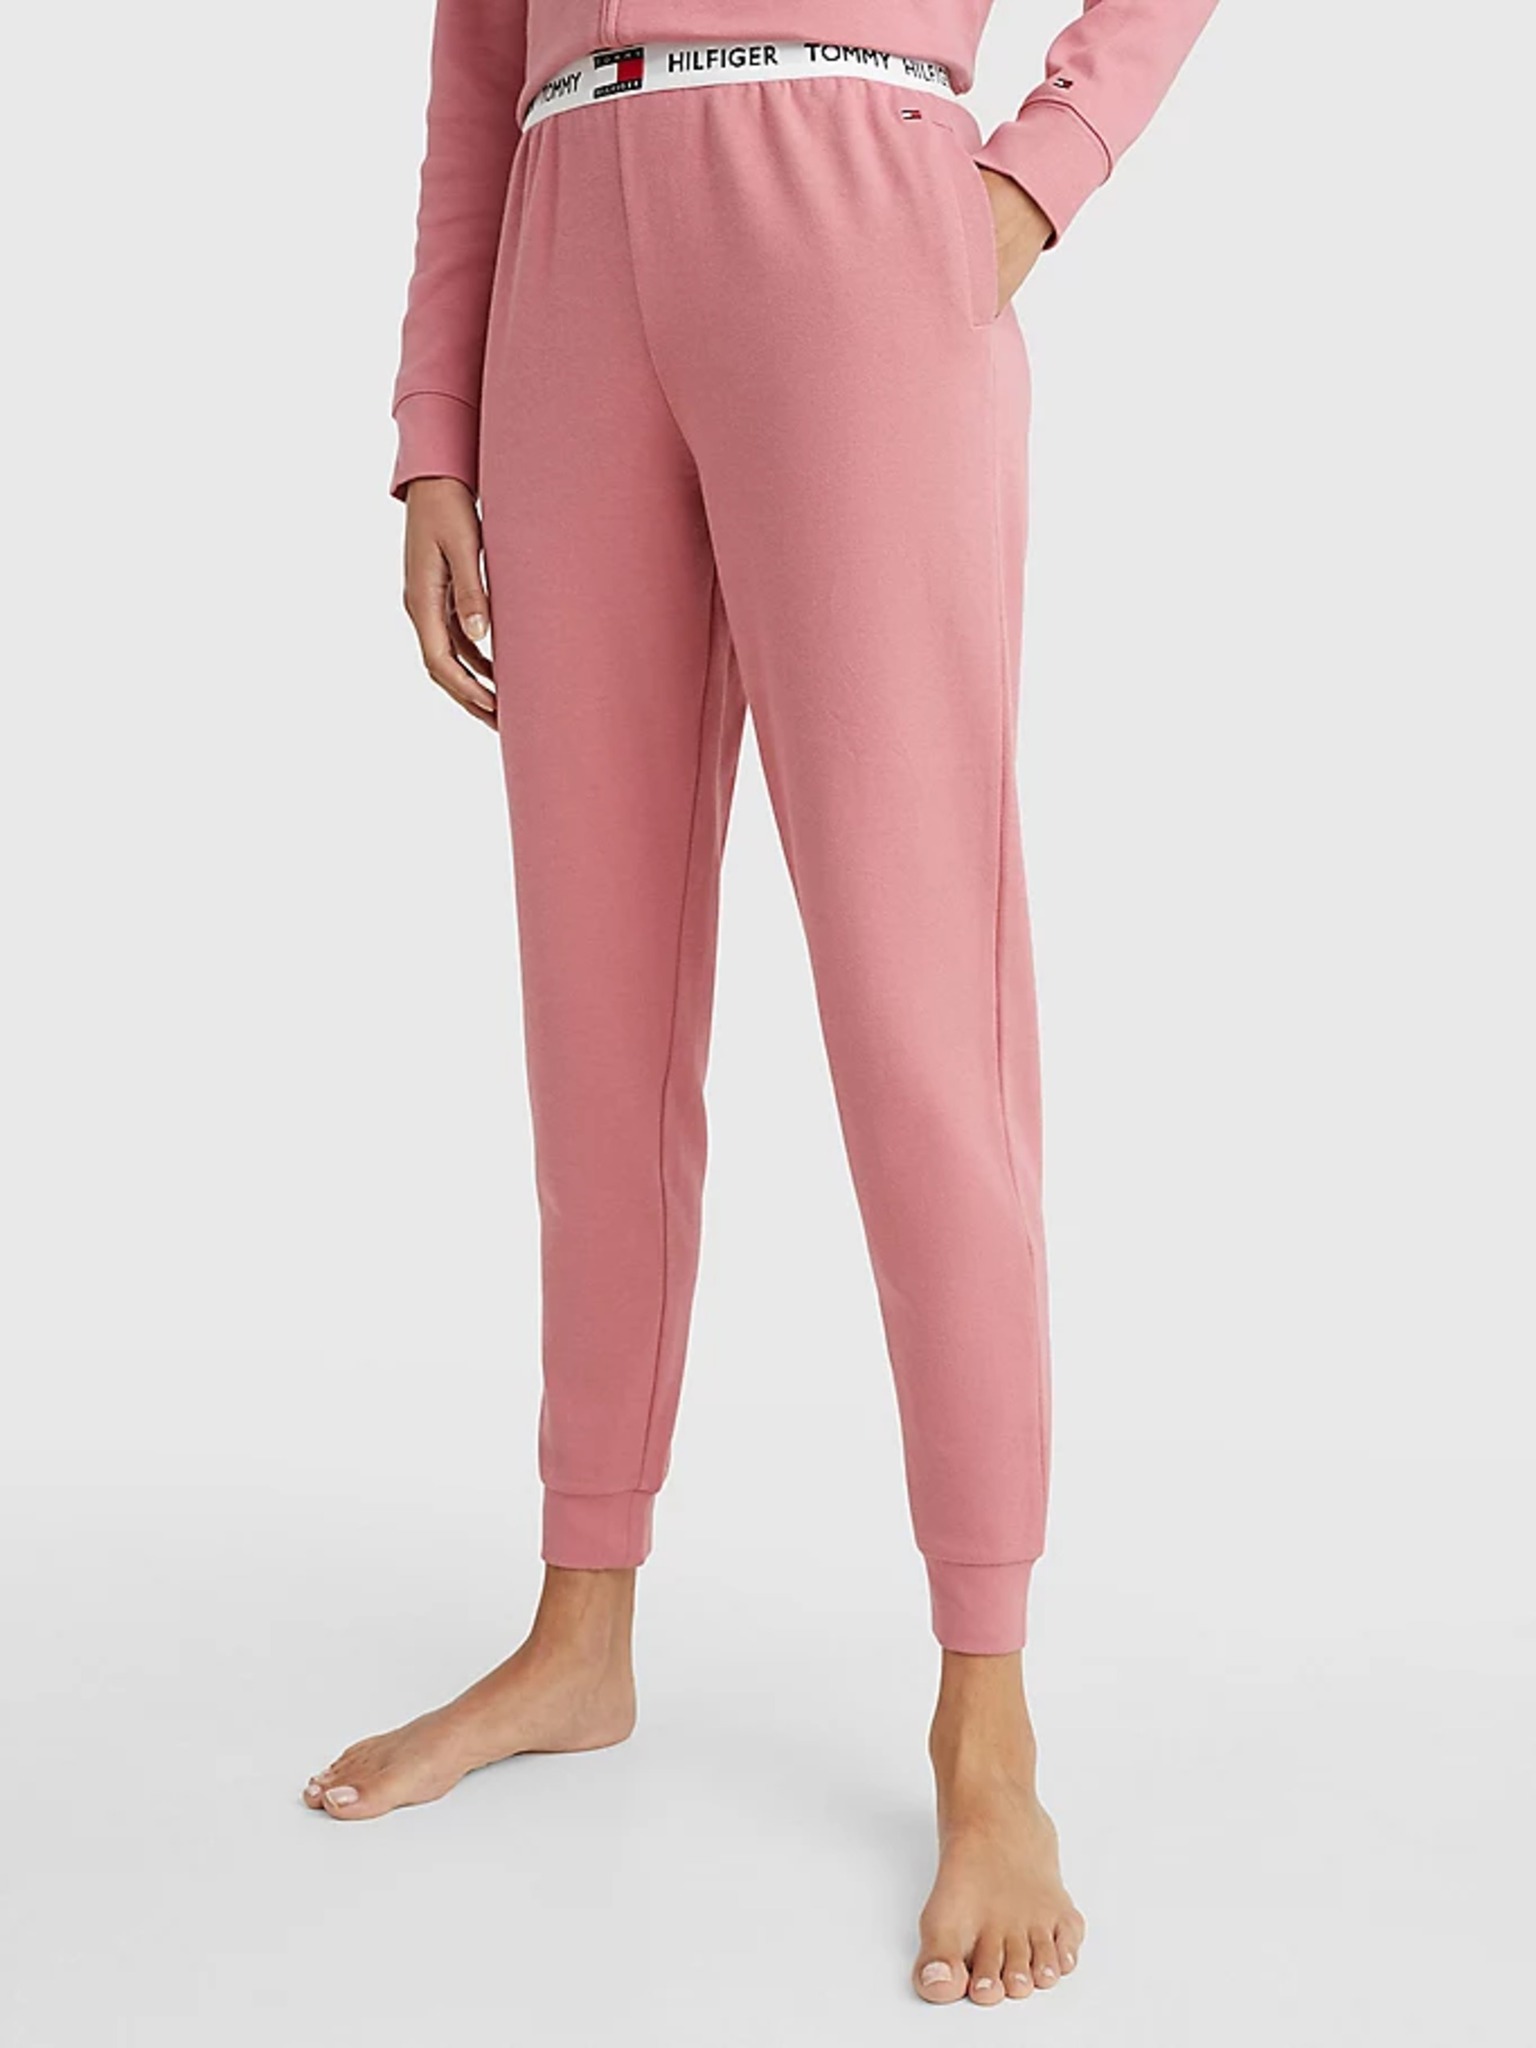 Tommy Hilfiger Women's XL Fuchsia Pink Sport Striped Boyfriend Sweatpants